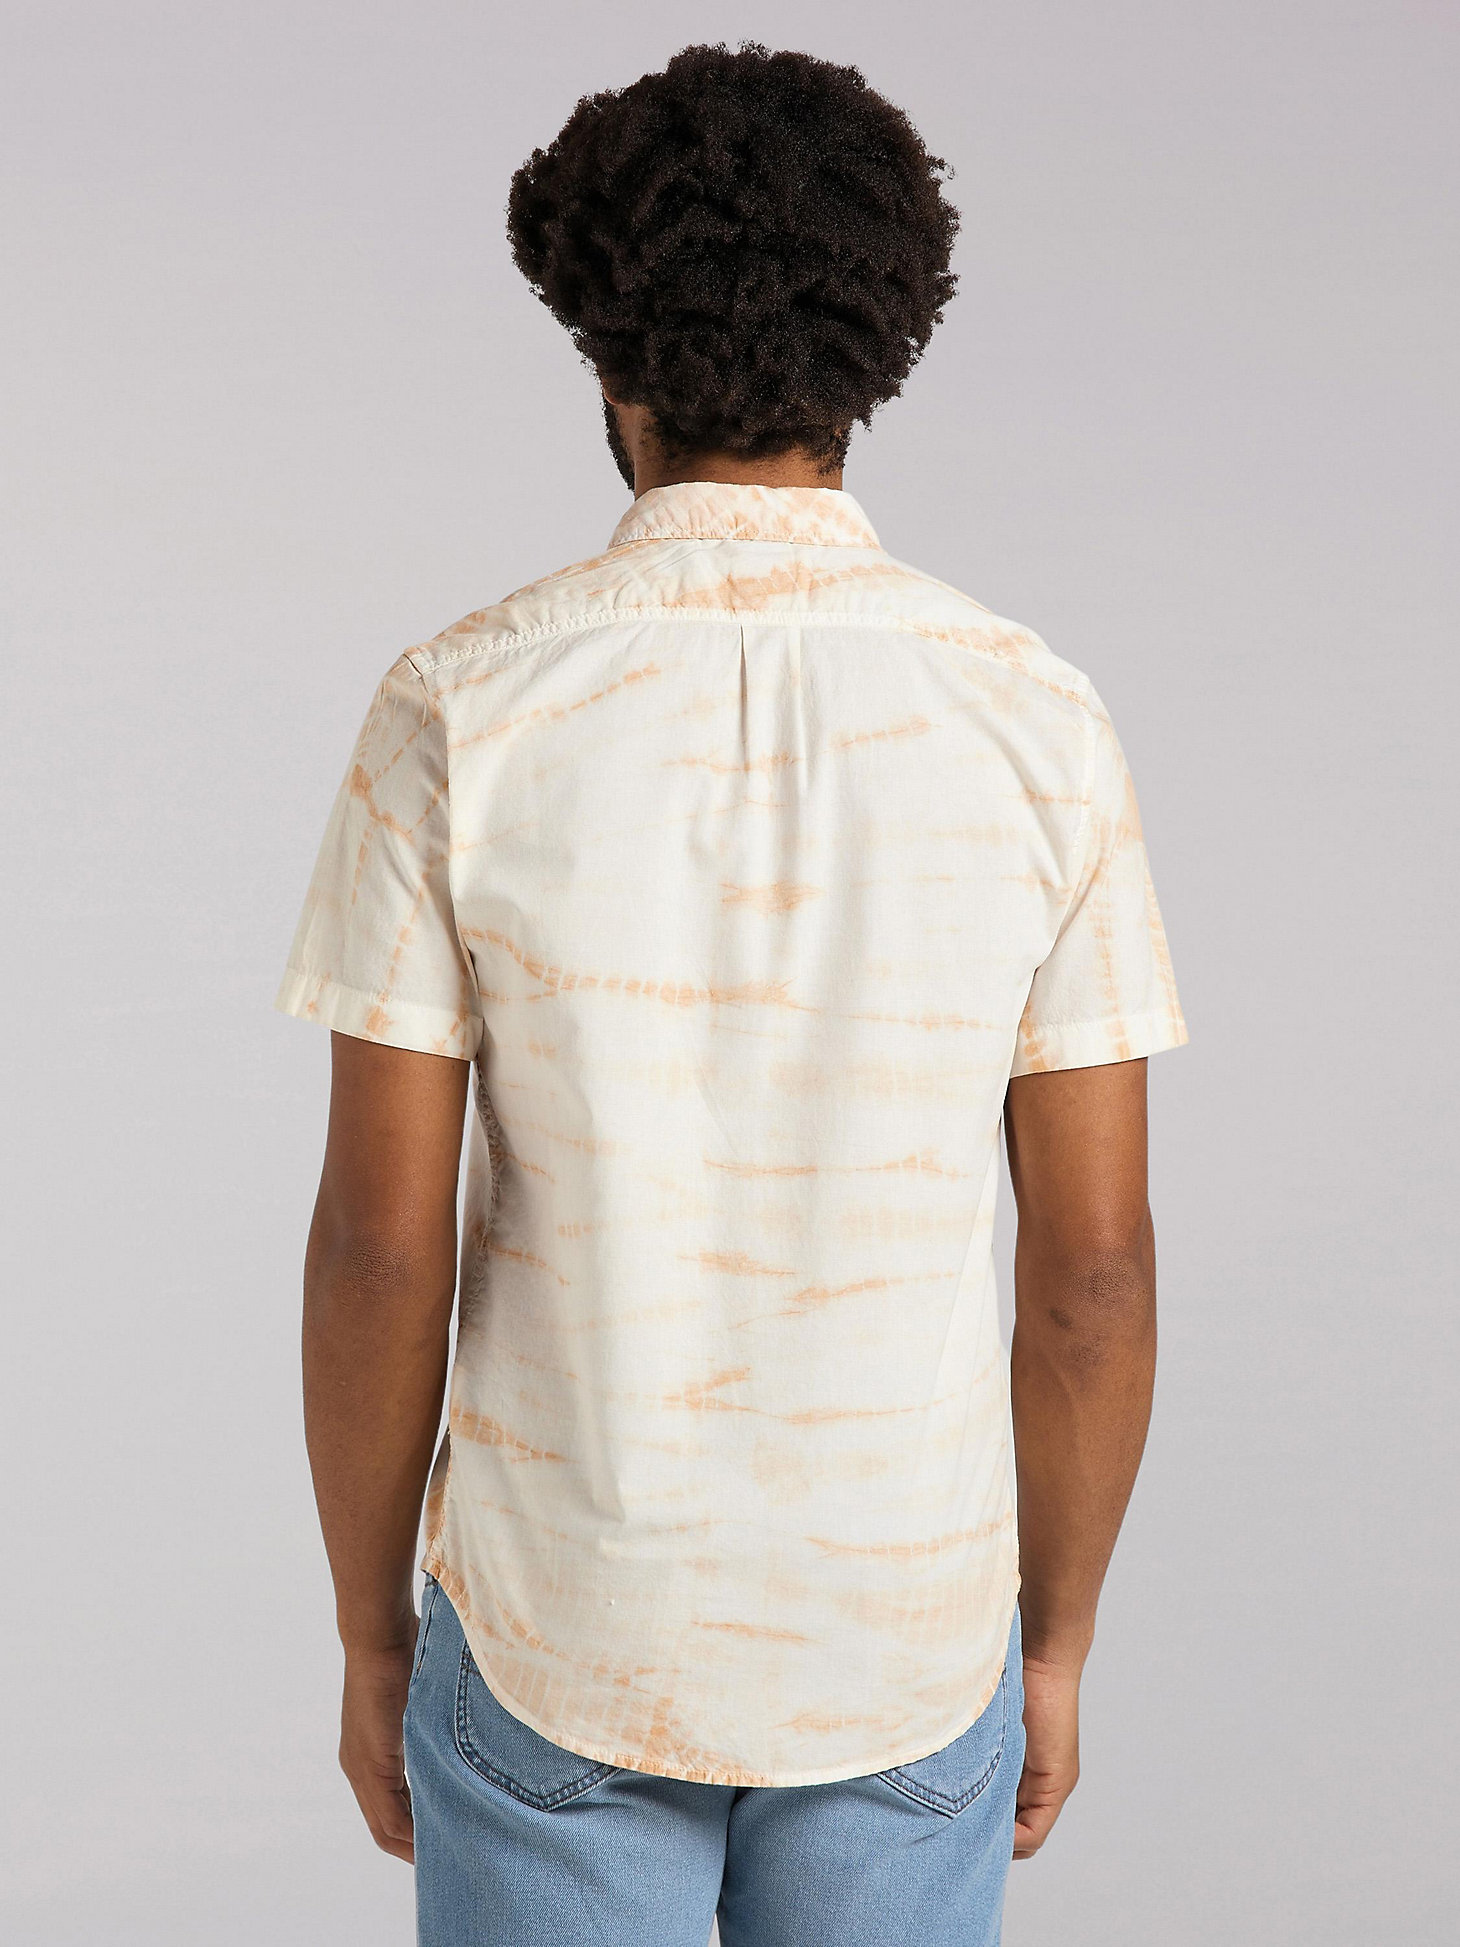 Men's European Collection Leesure Woven Shirt in Sunset alternative view 1